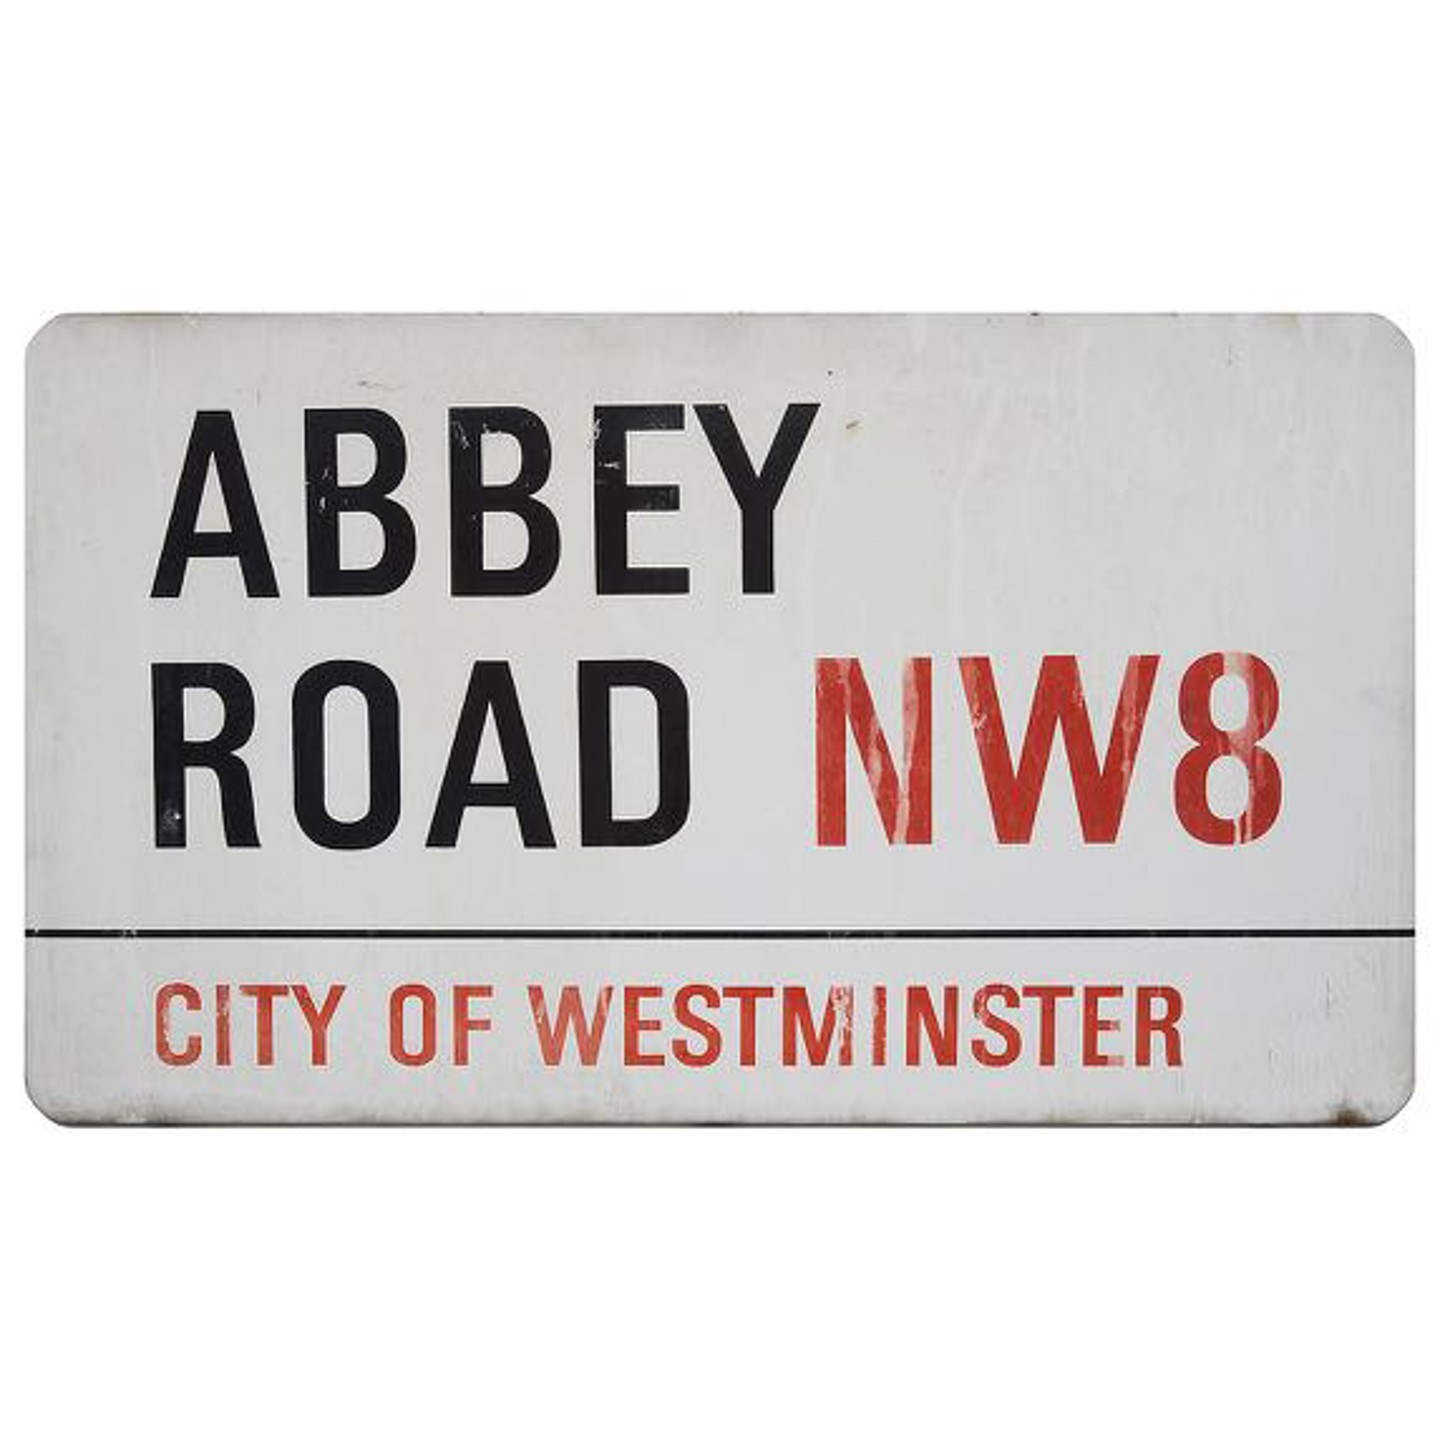 Abbey Road (Hi Res Neede)